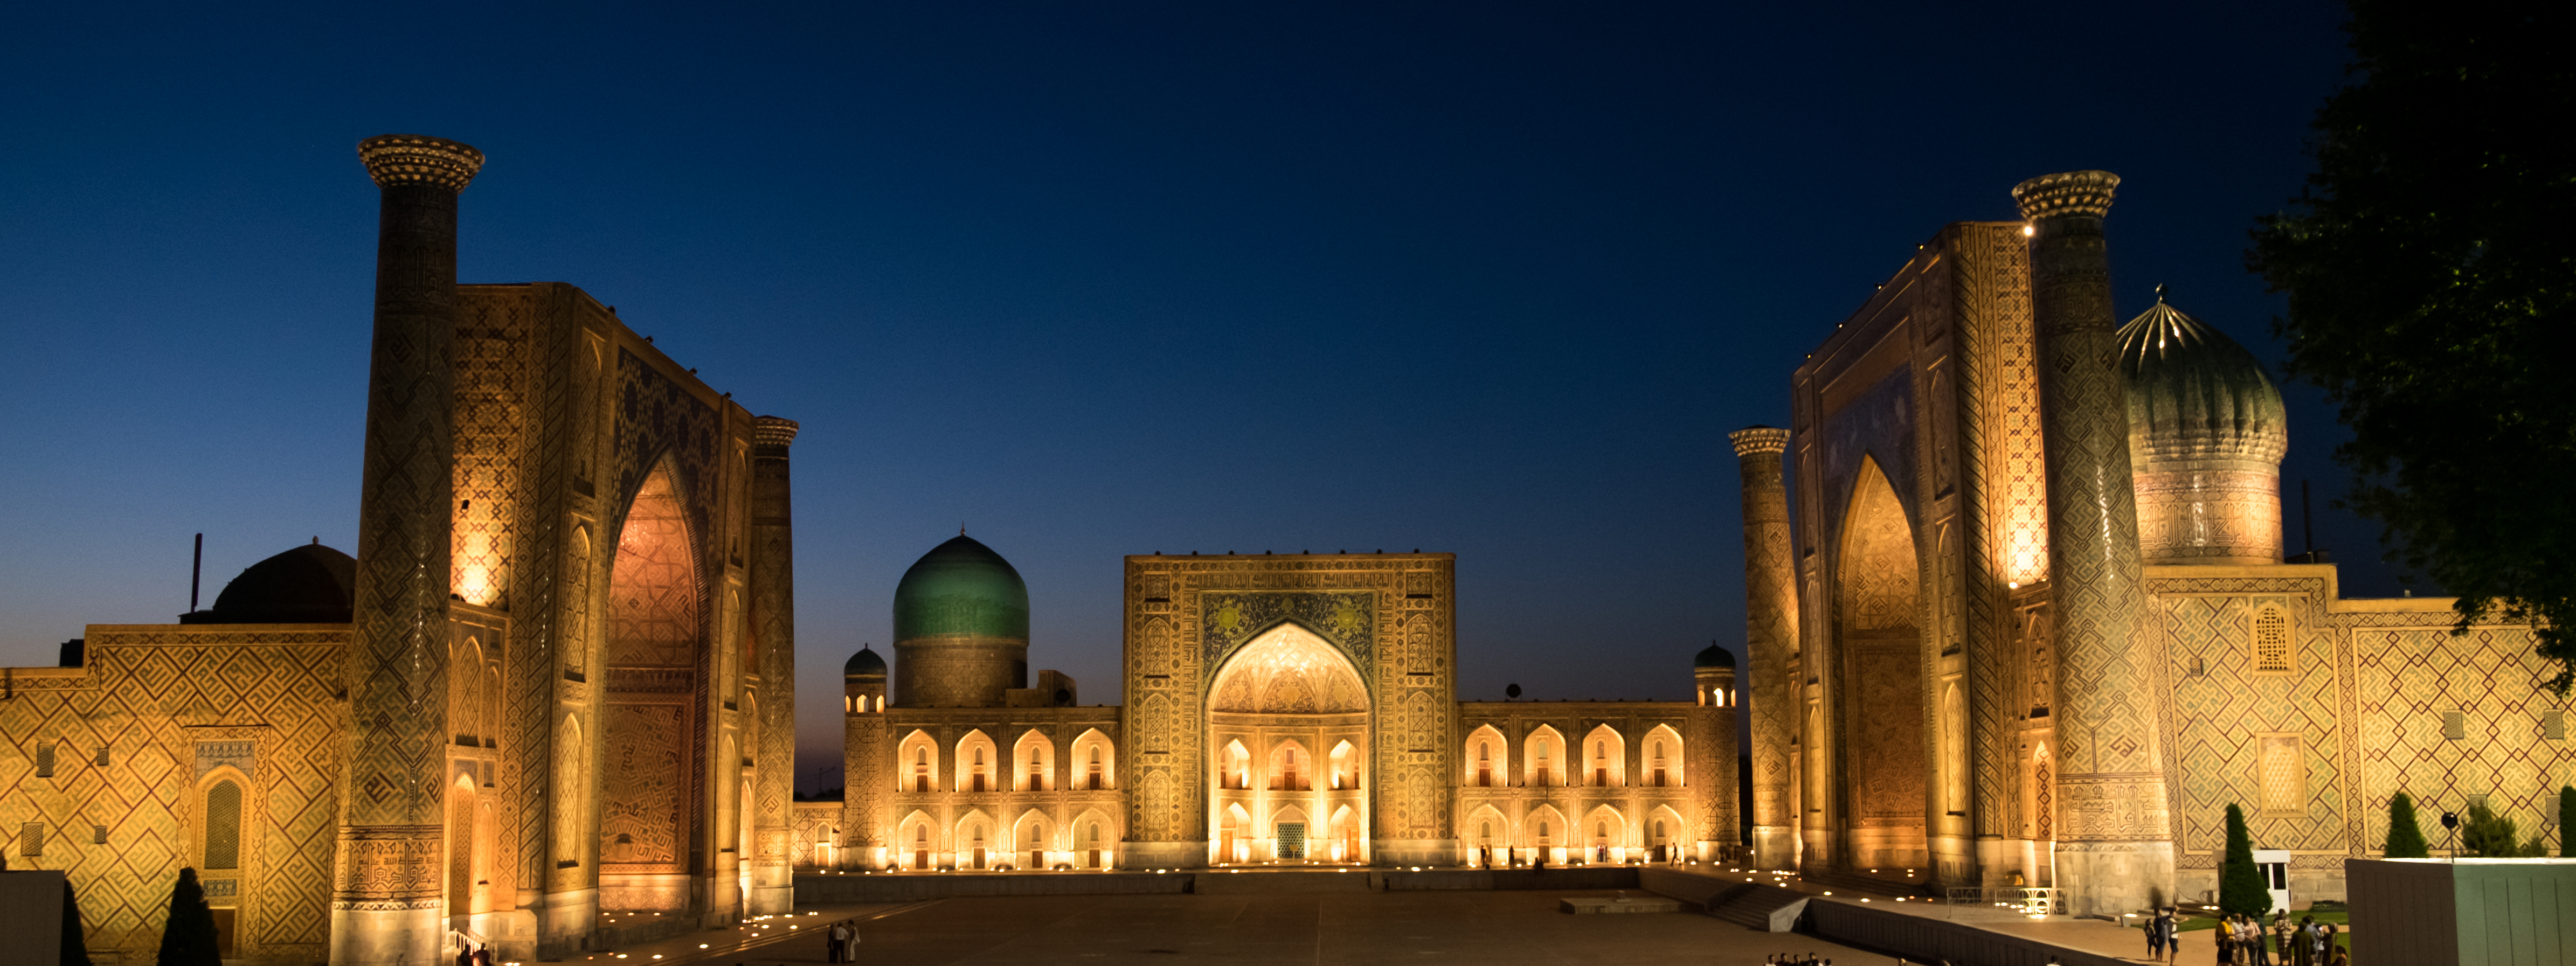 Registan at night - Samarkand - Uzbekistan